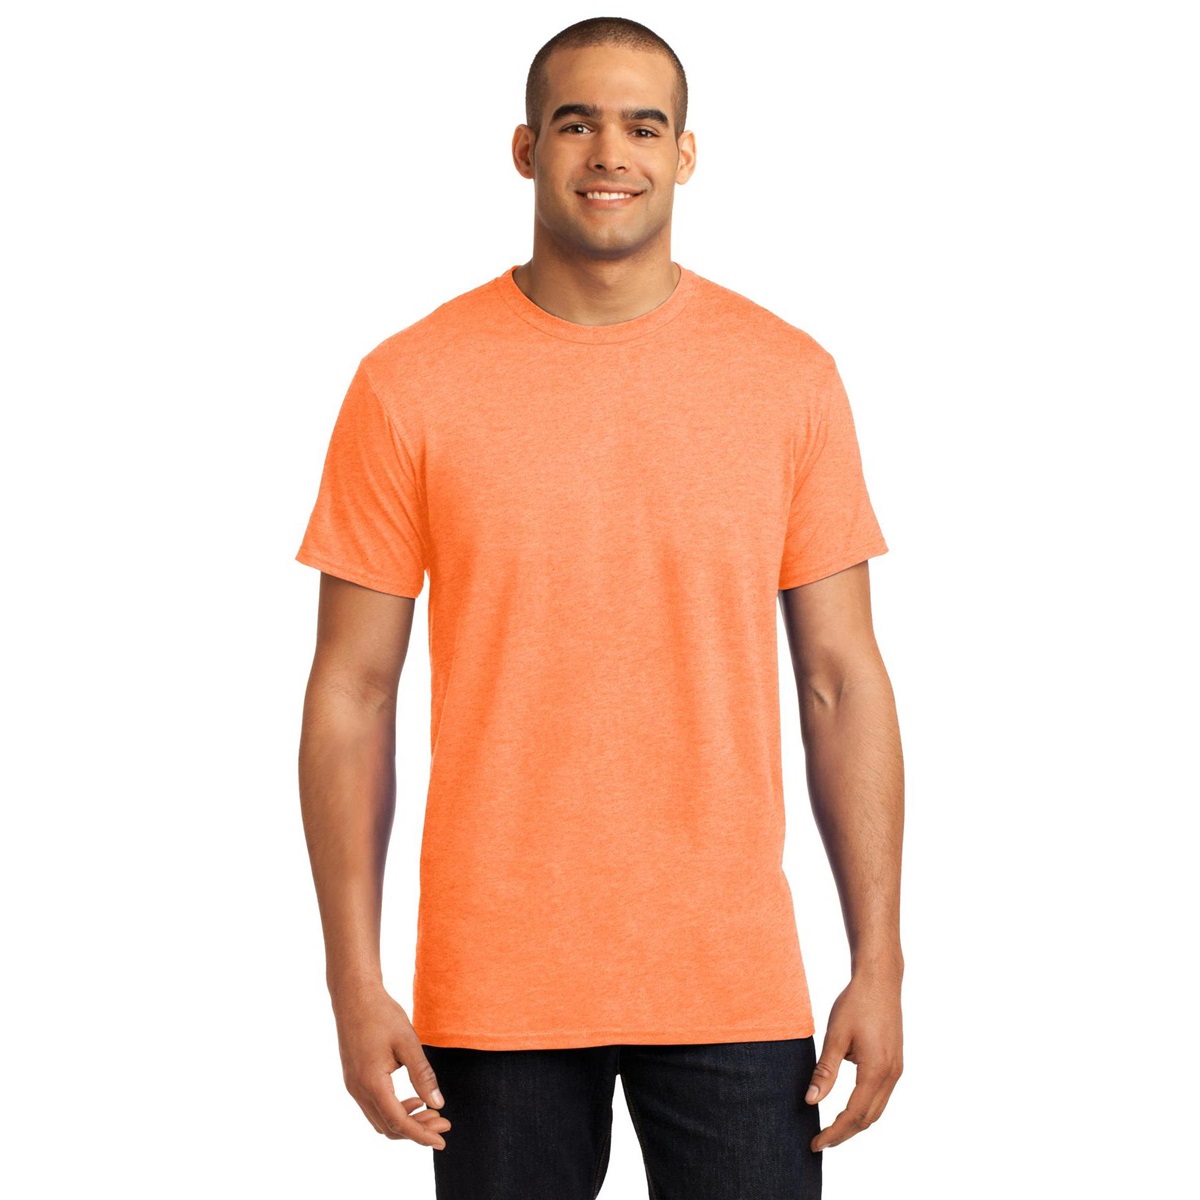 Heather Orange T Shirt Clearance, 50% OFF